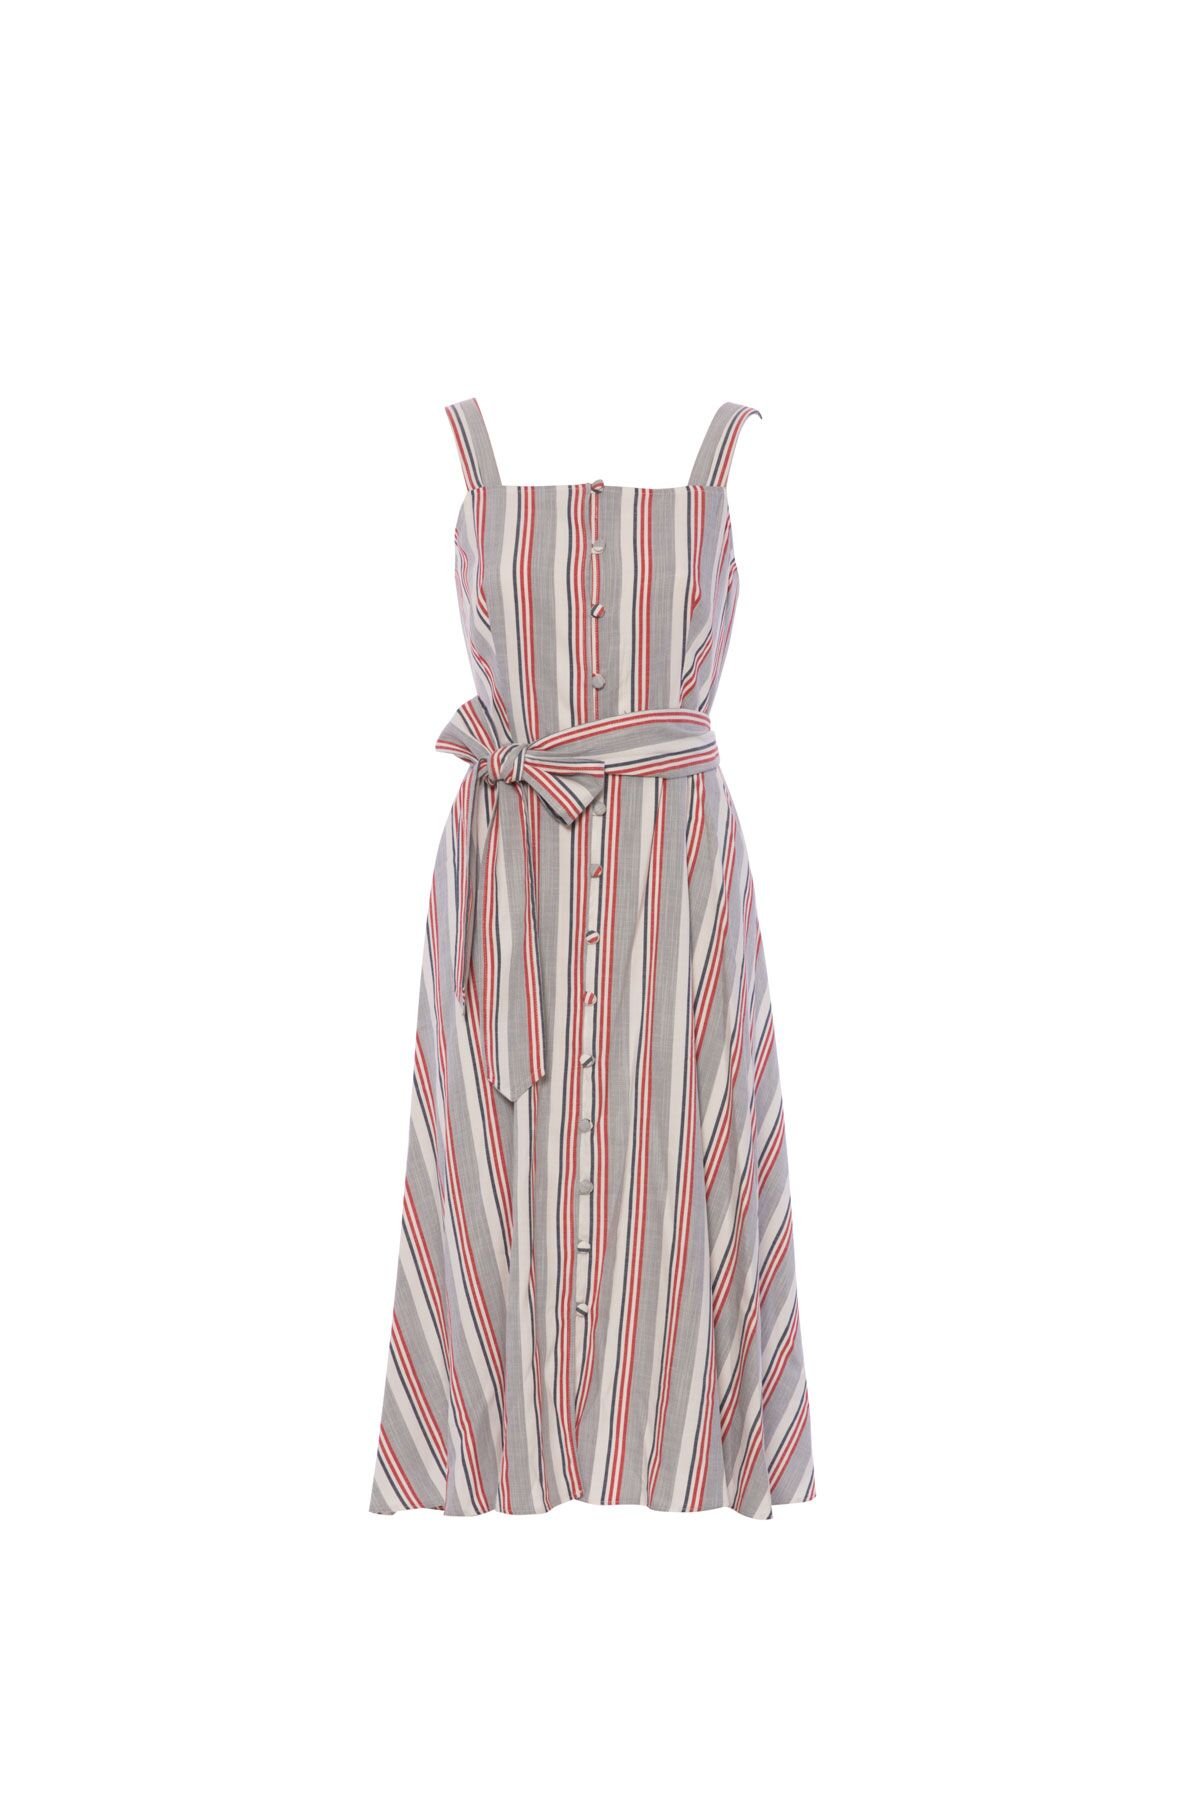 Striped Linen Strap Belted Fabric Button Midi Dress